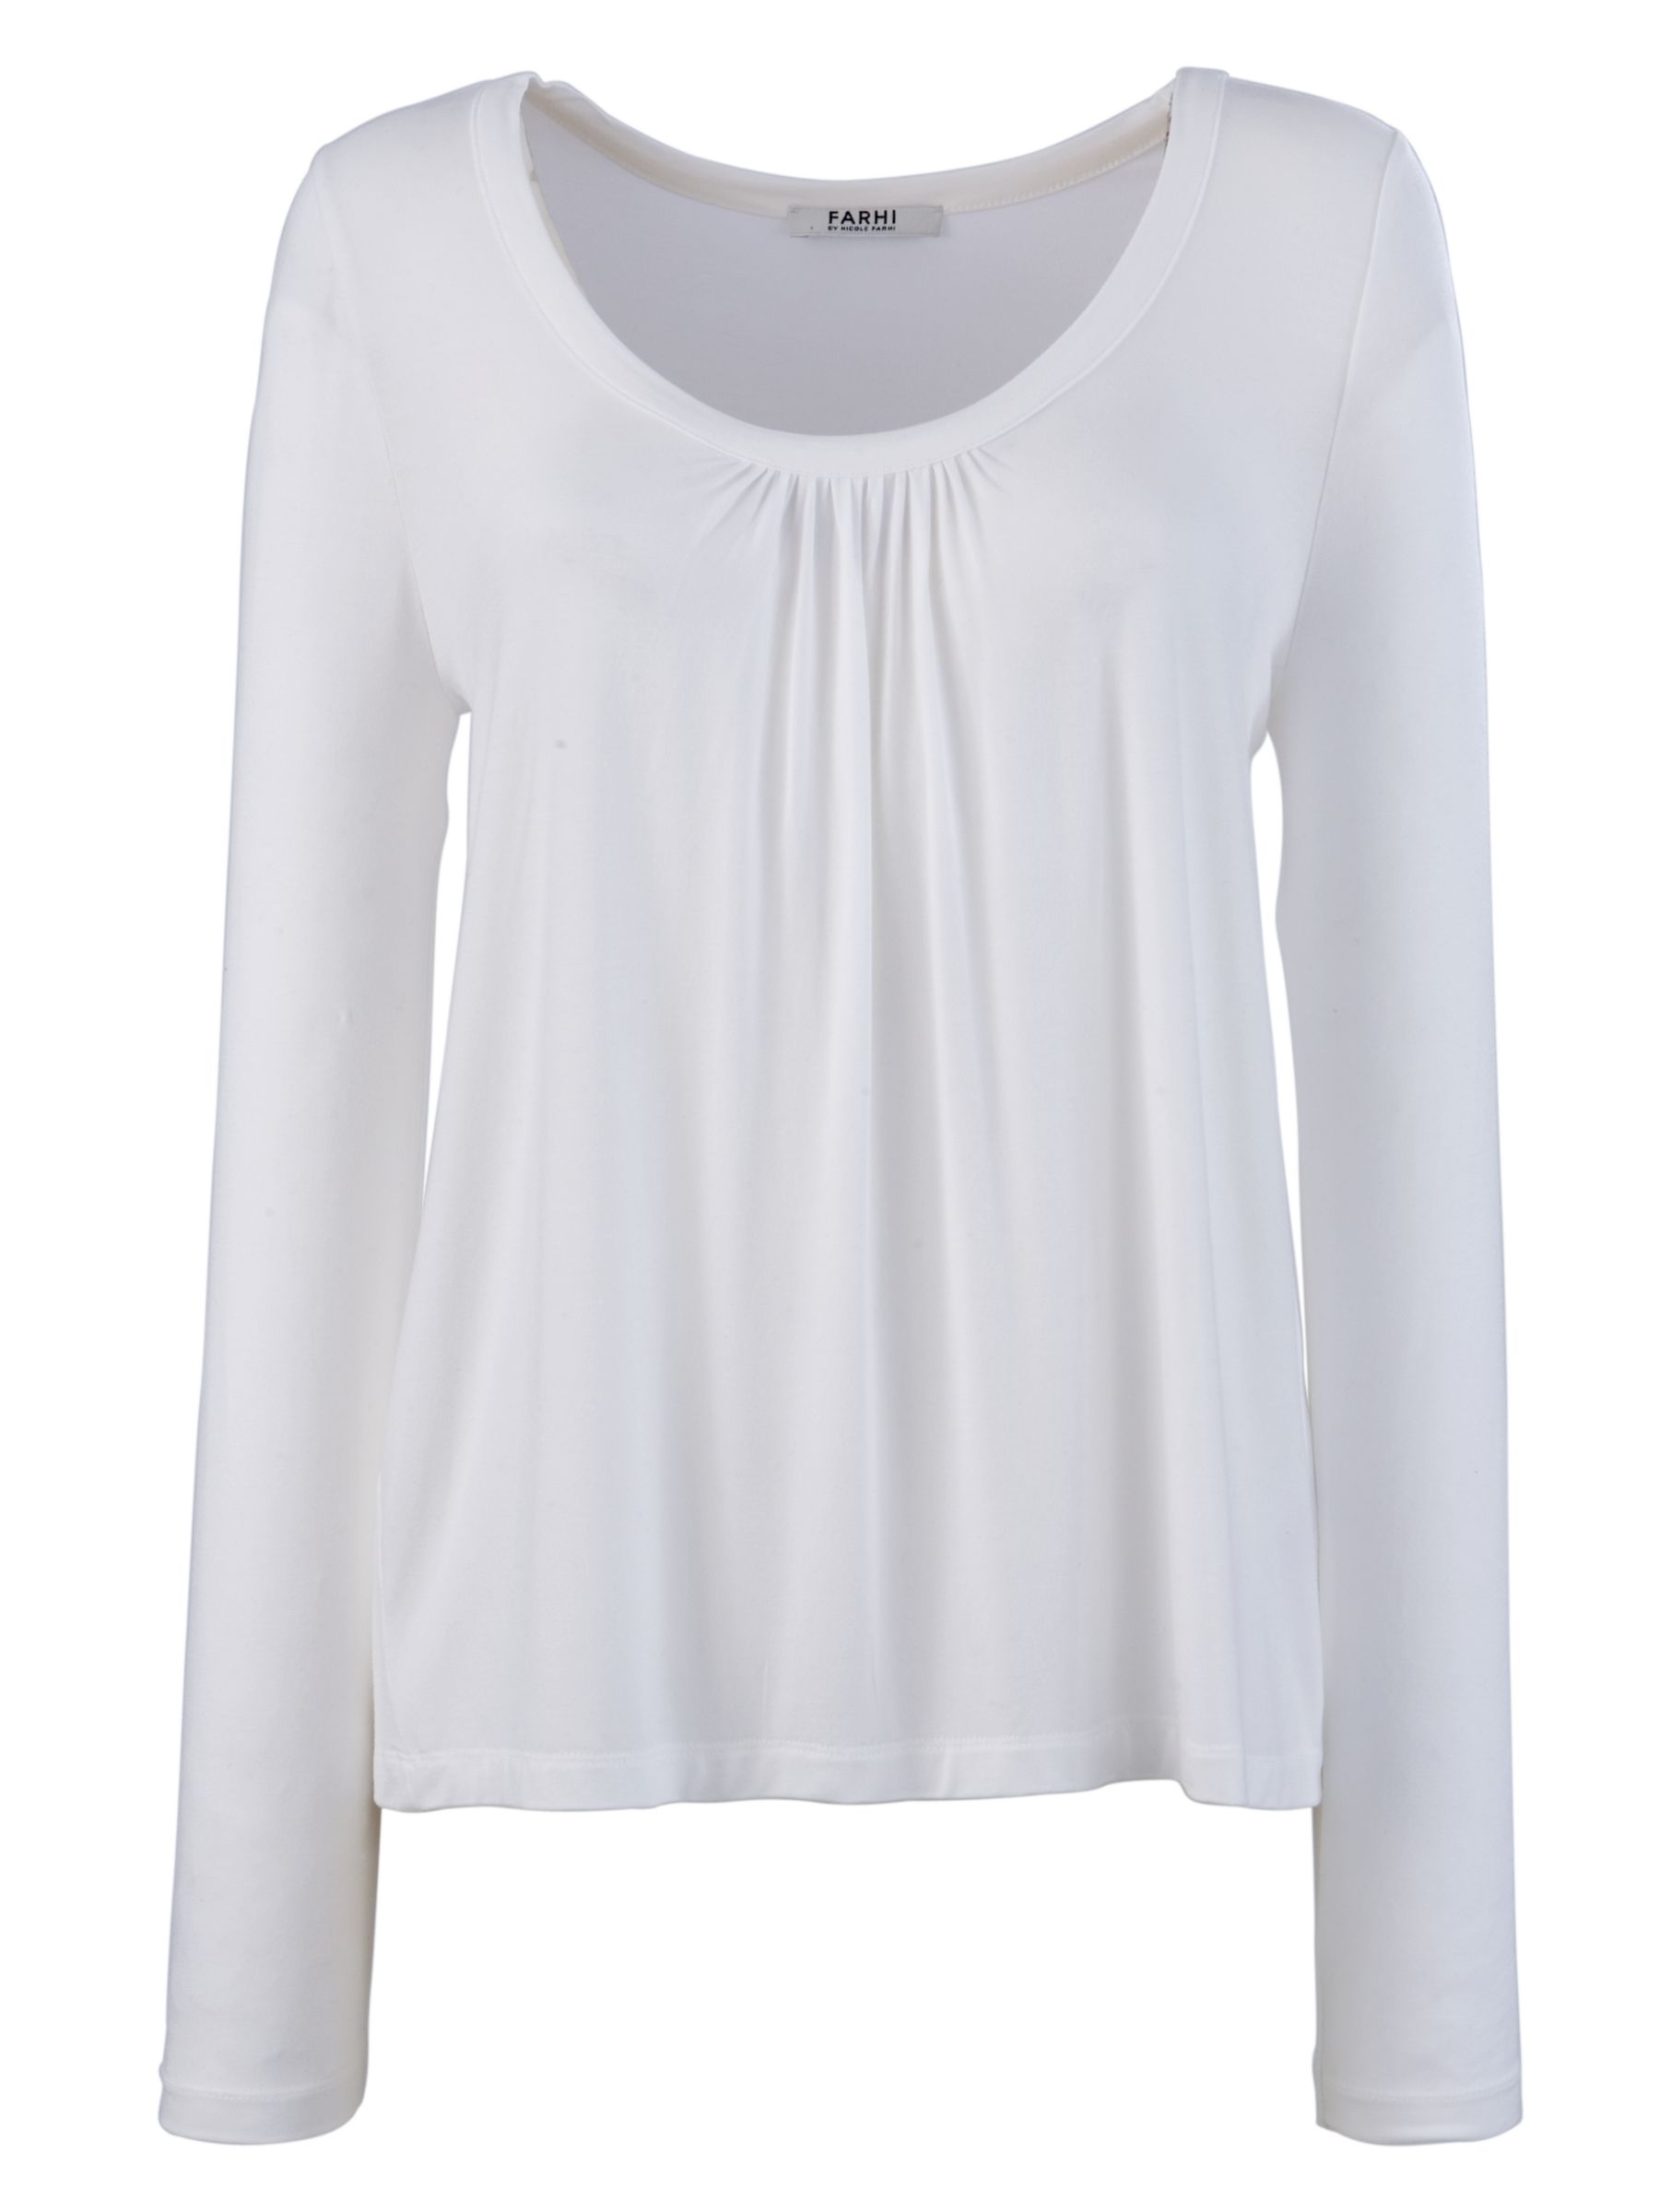 Farhi by Nicole Farhi Farhi Scoop Neck Long Sleeve White T-Shirt, White